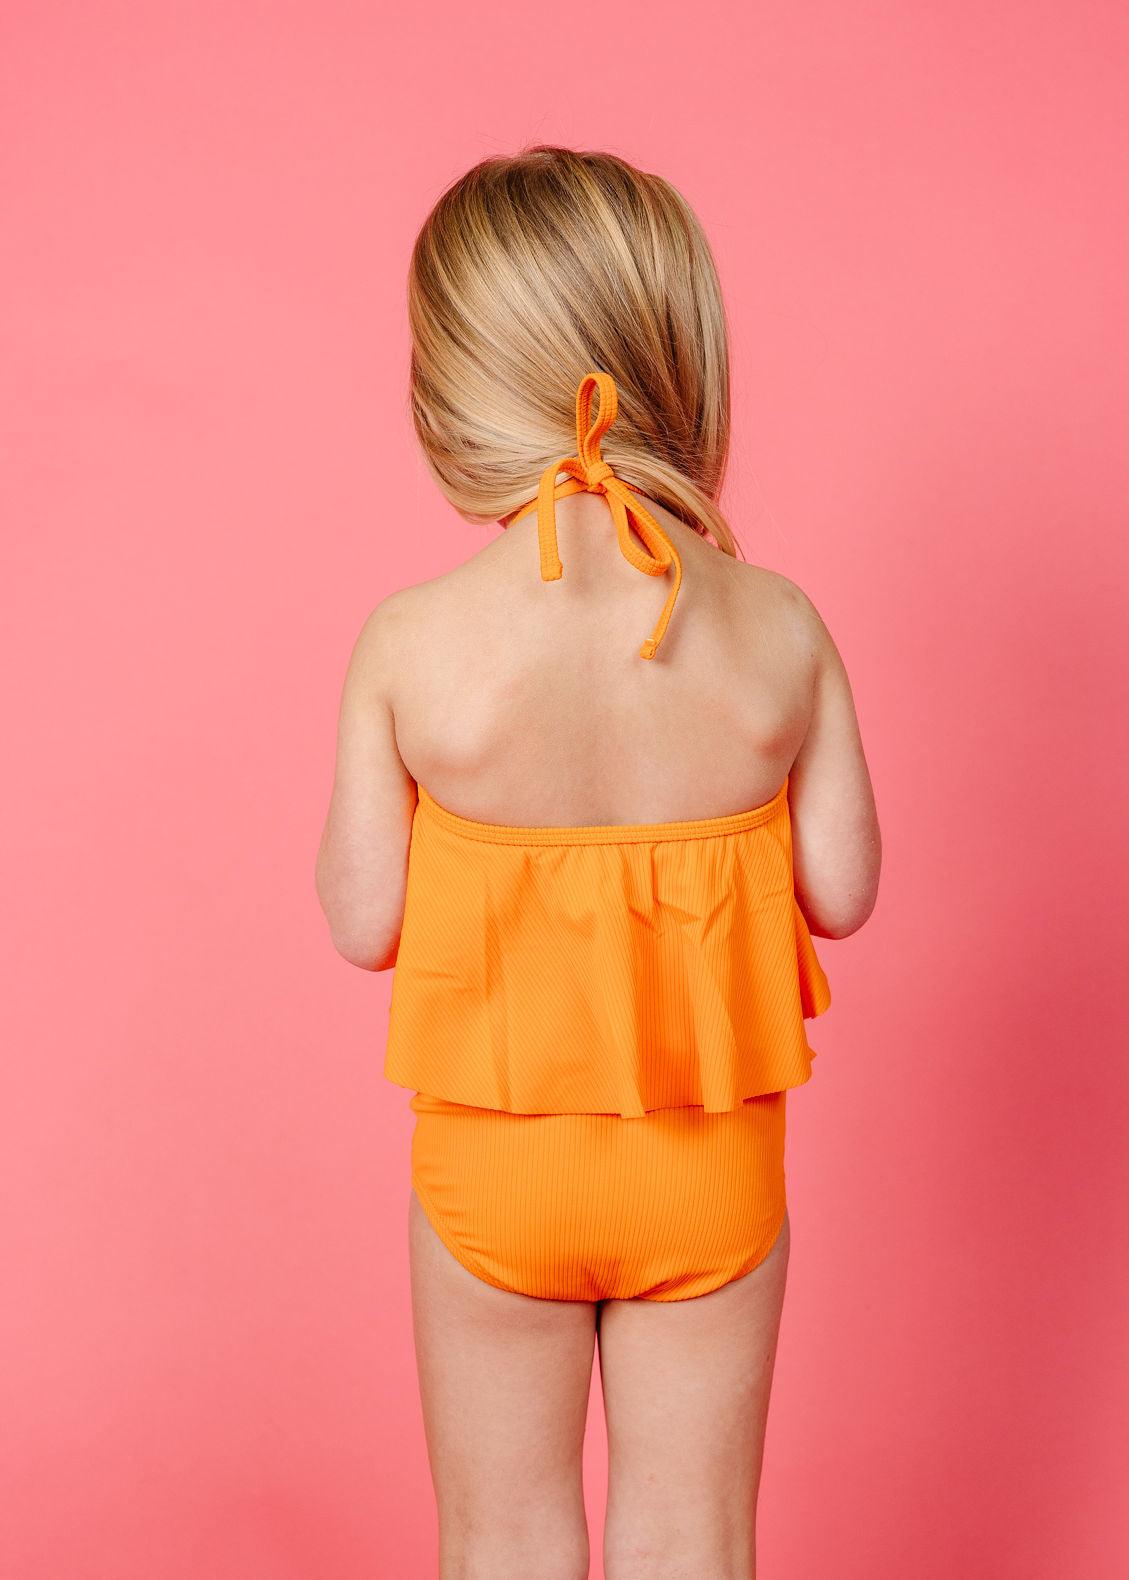 Mini Swing Top | Ribbed Flaming Orange - Kortni Jeane